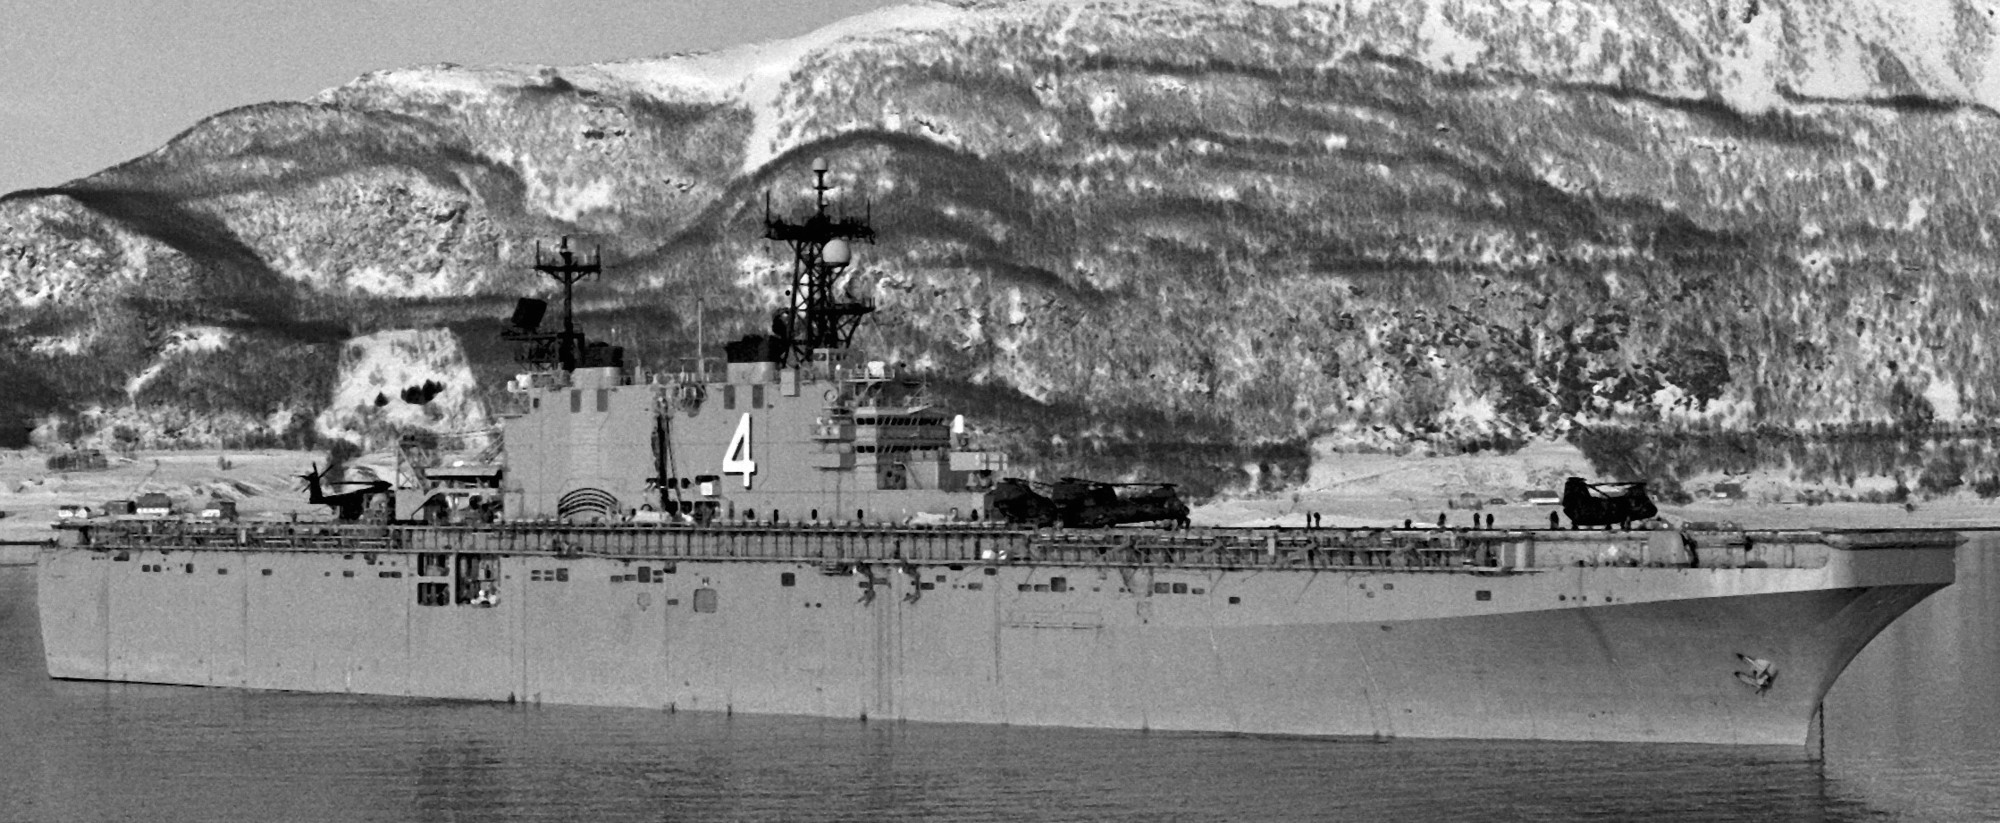 lha-4 uss nassau tarawa class amphibious assault ship us navy 110